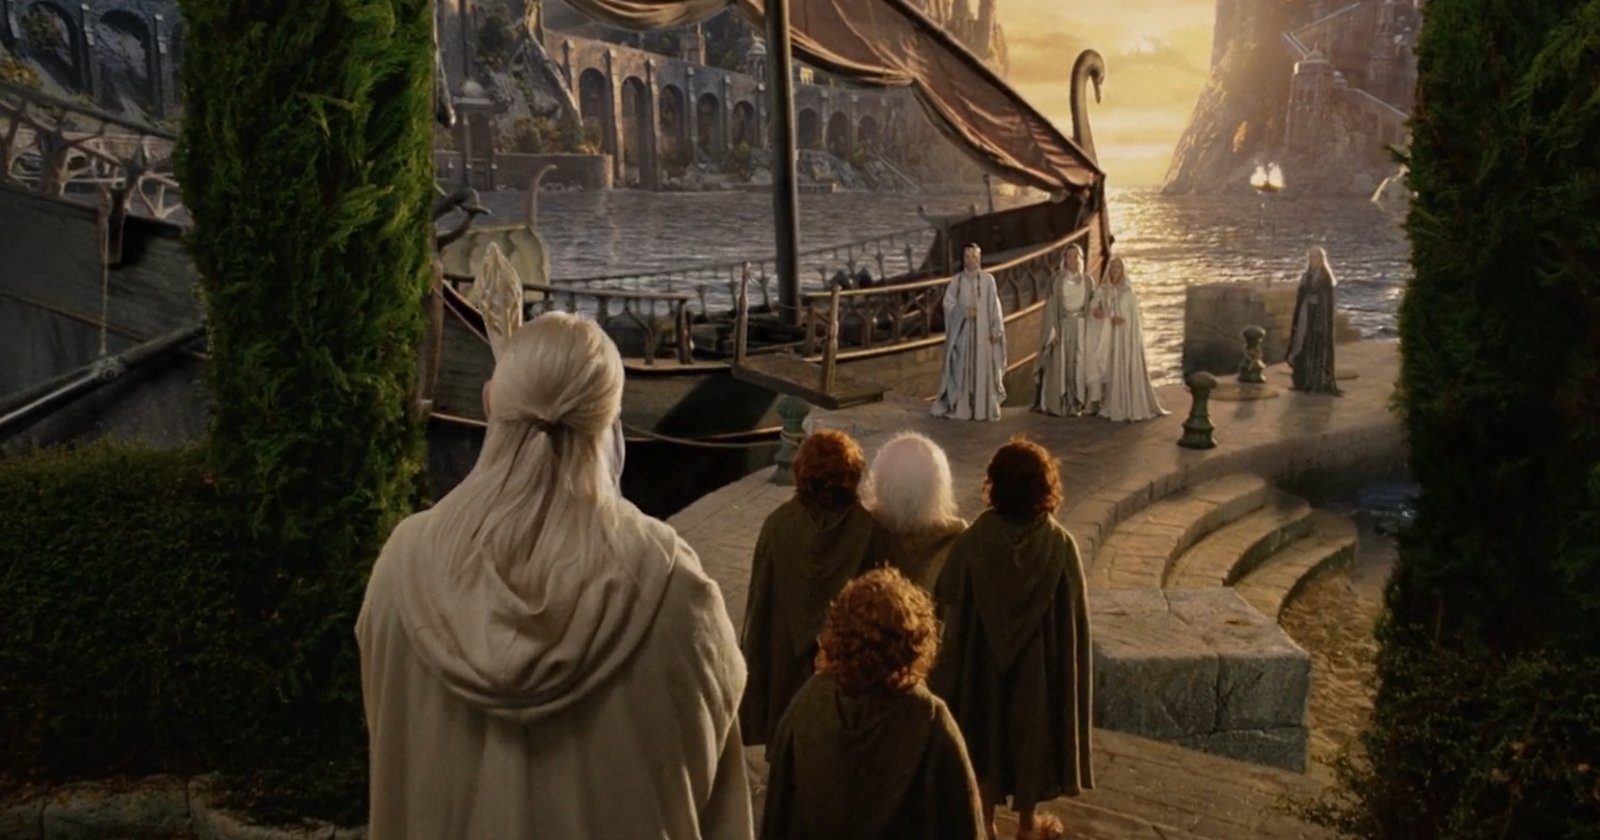 Властелин колец моменты. Ривенделл Фродо. Хоббит Возвращение короля. Властелин колец Возвращение короля Гэндальф. Властелин колец Возвращение короля Фродо финал.